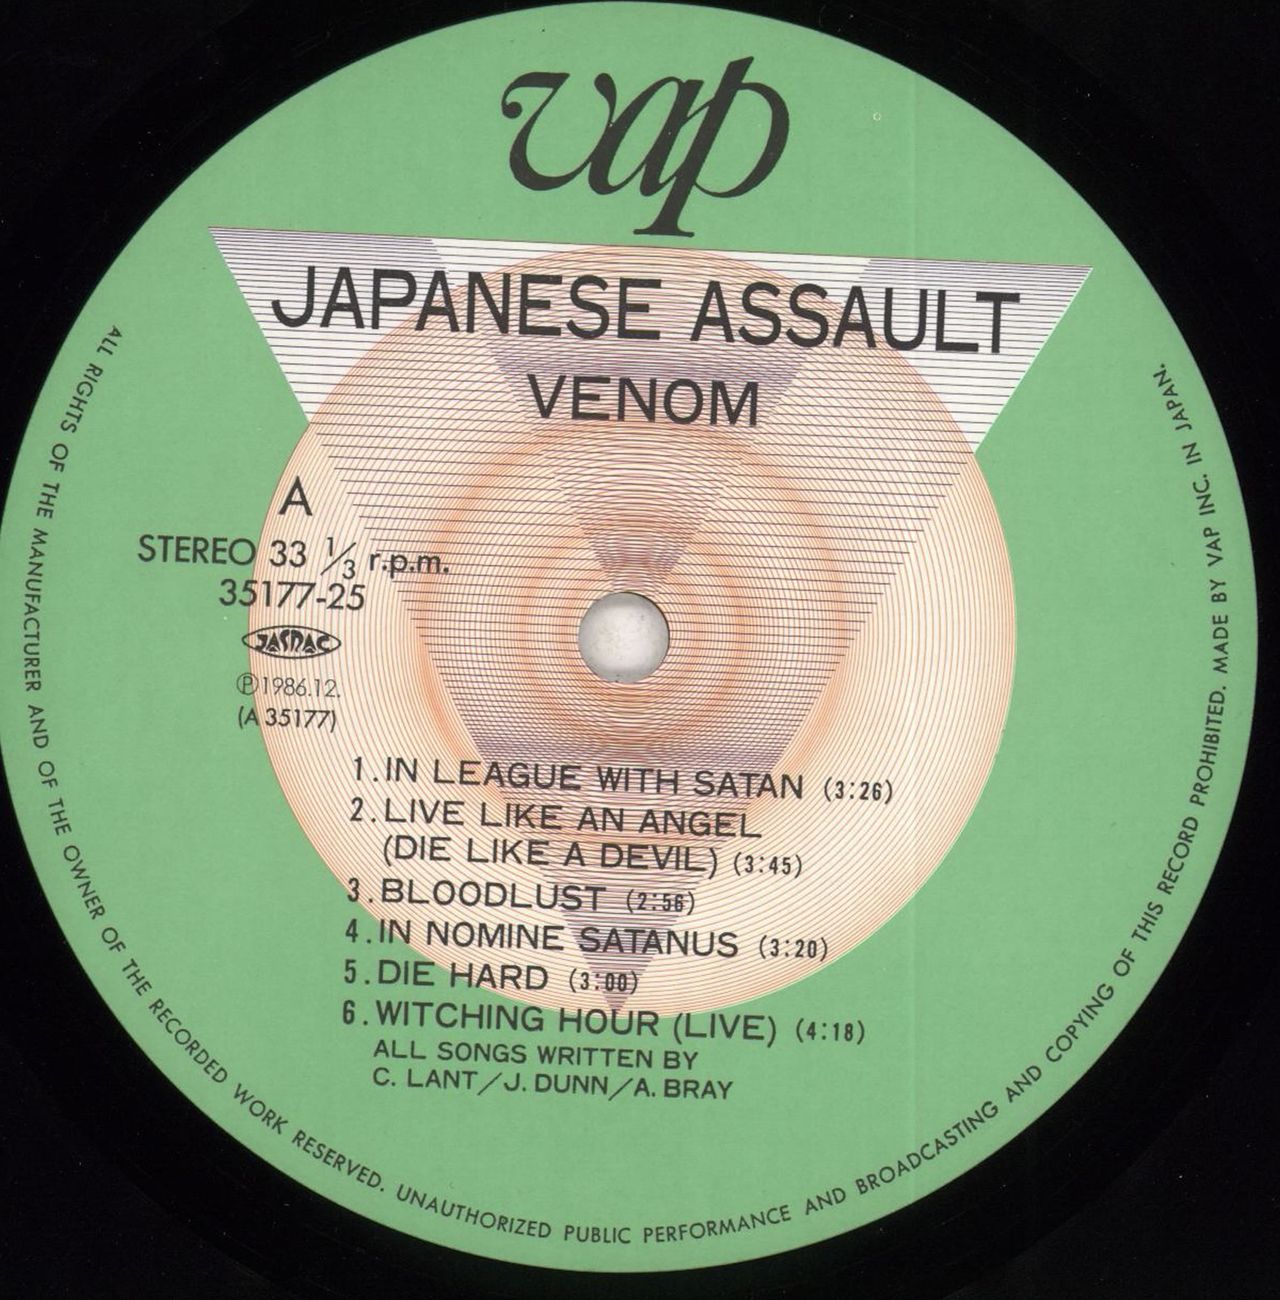 VENOM Japanese Assault - CD